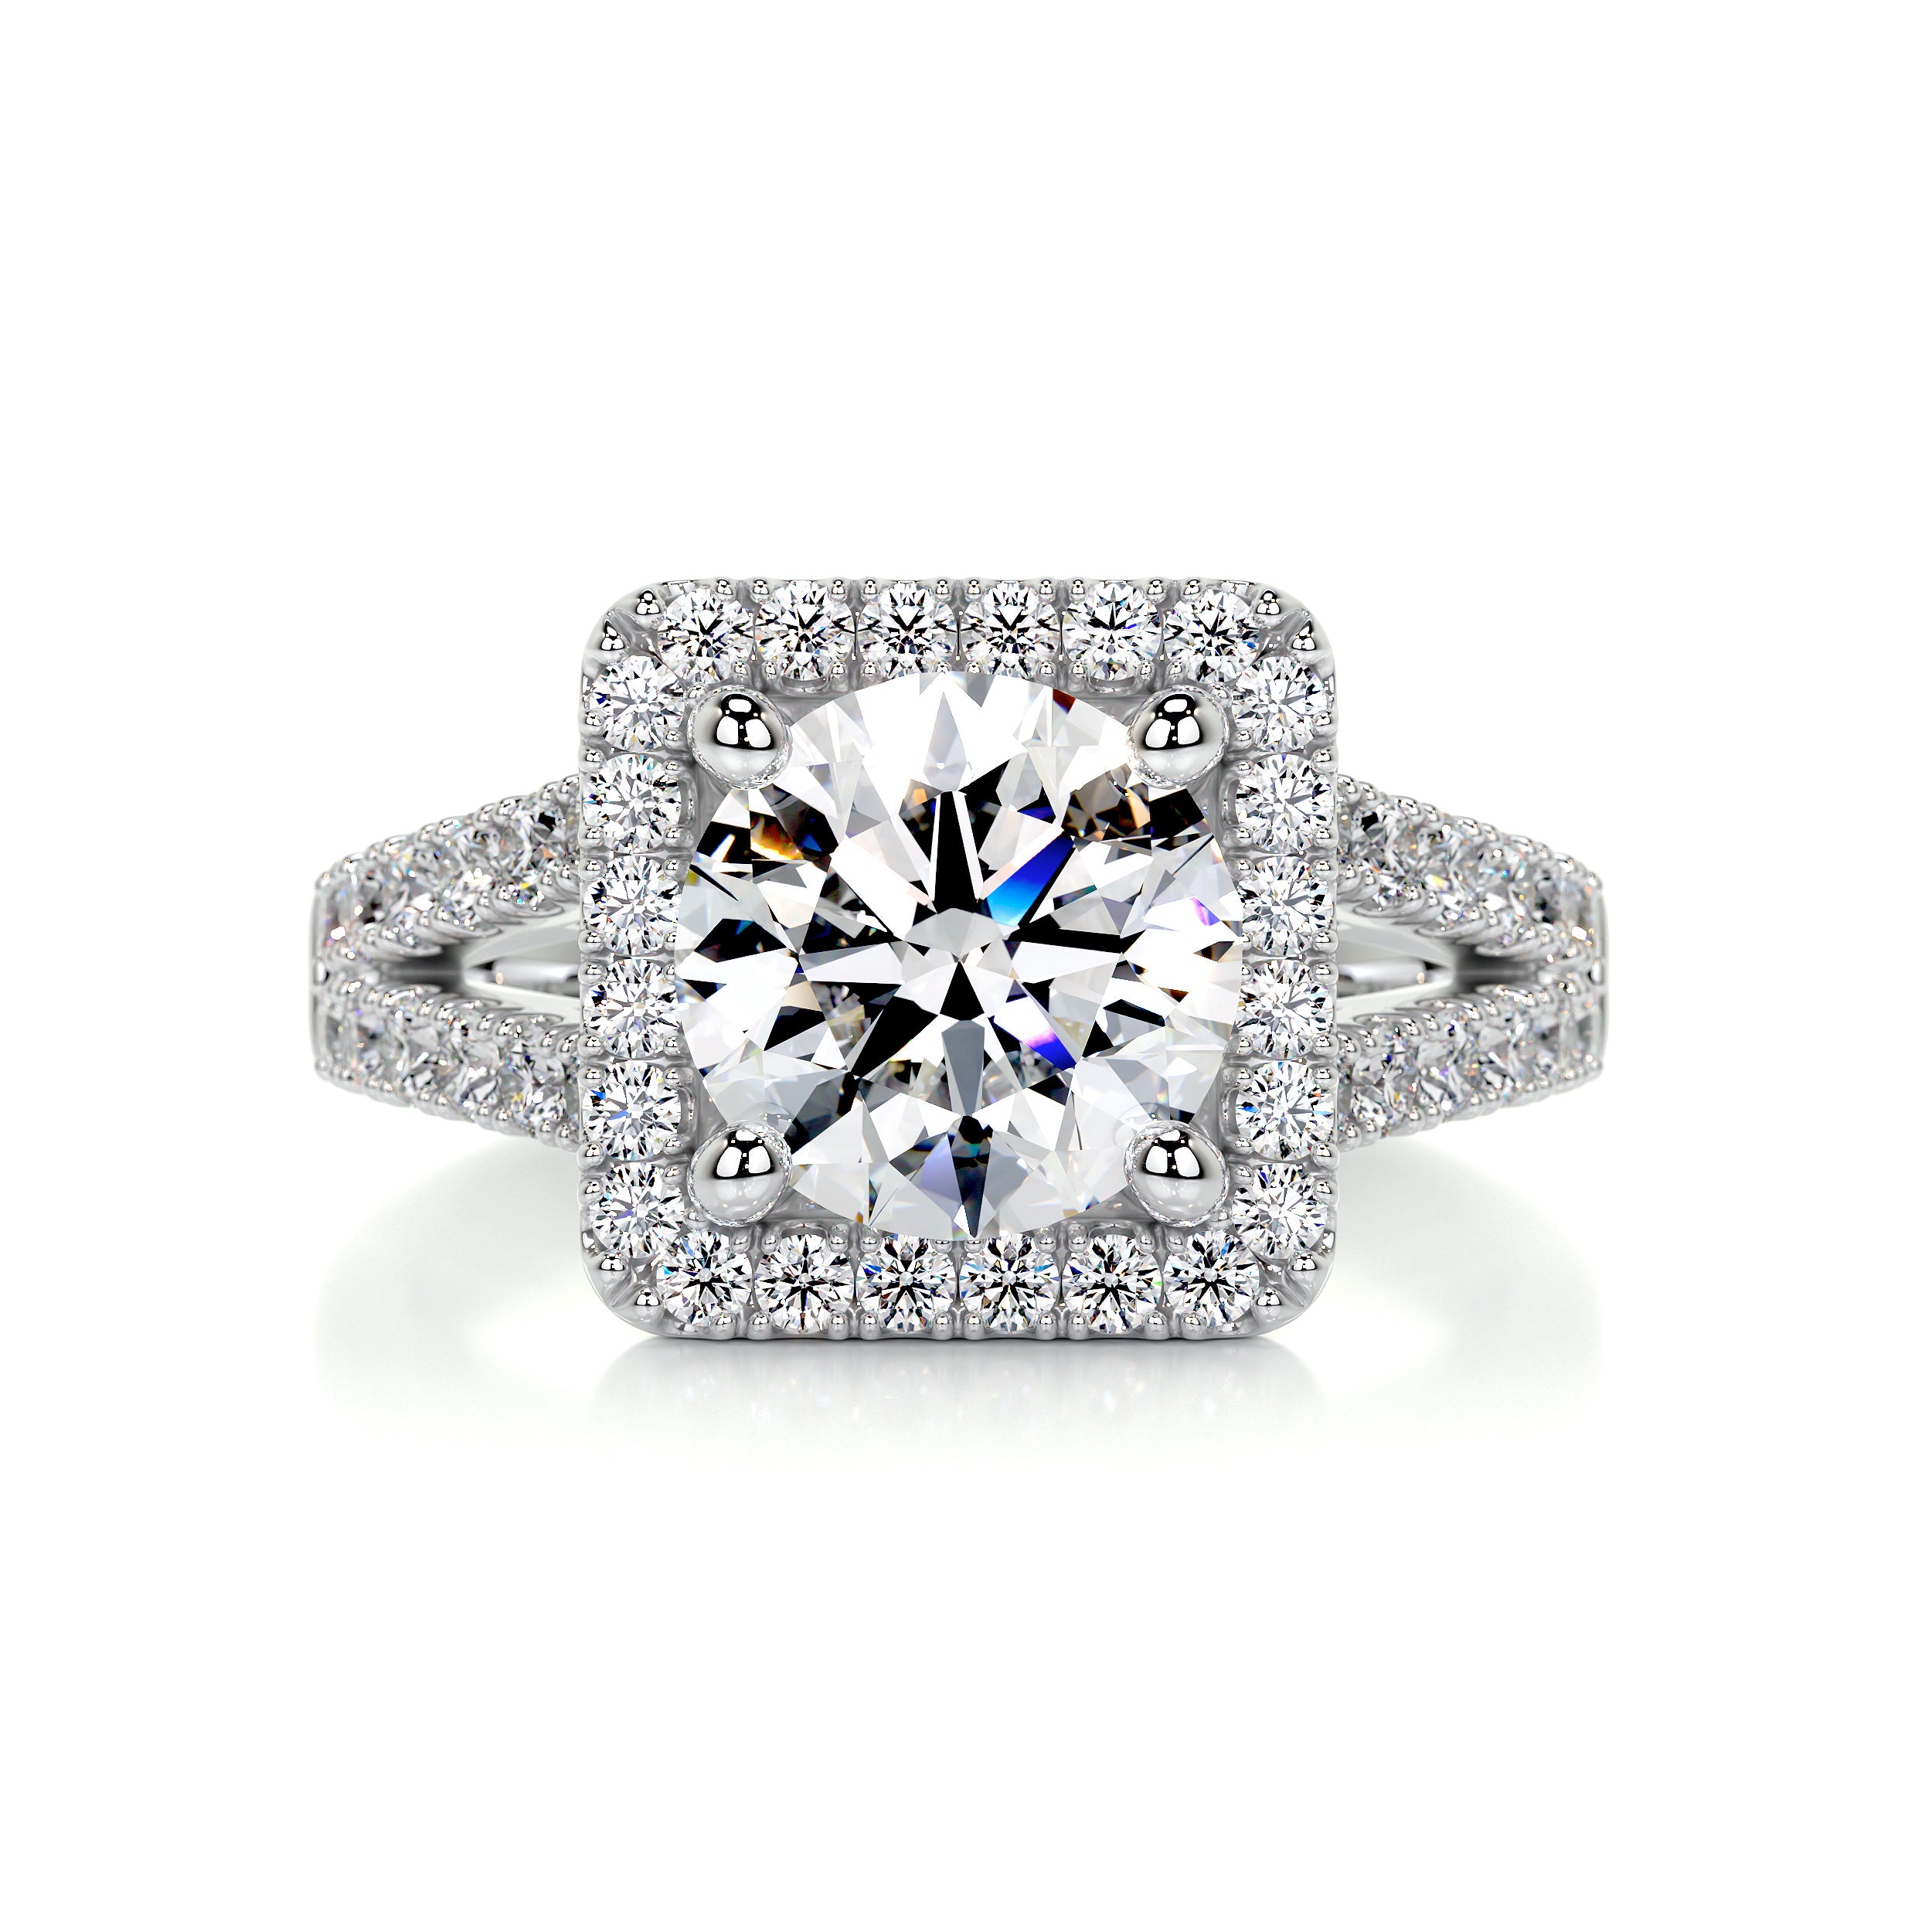 Addison Diamond Engagement Ring   (2.5 Carat) -14K White Gold